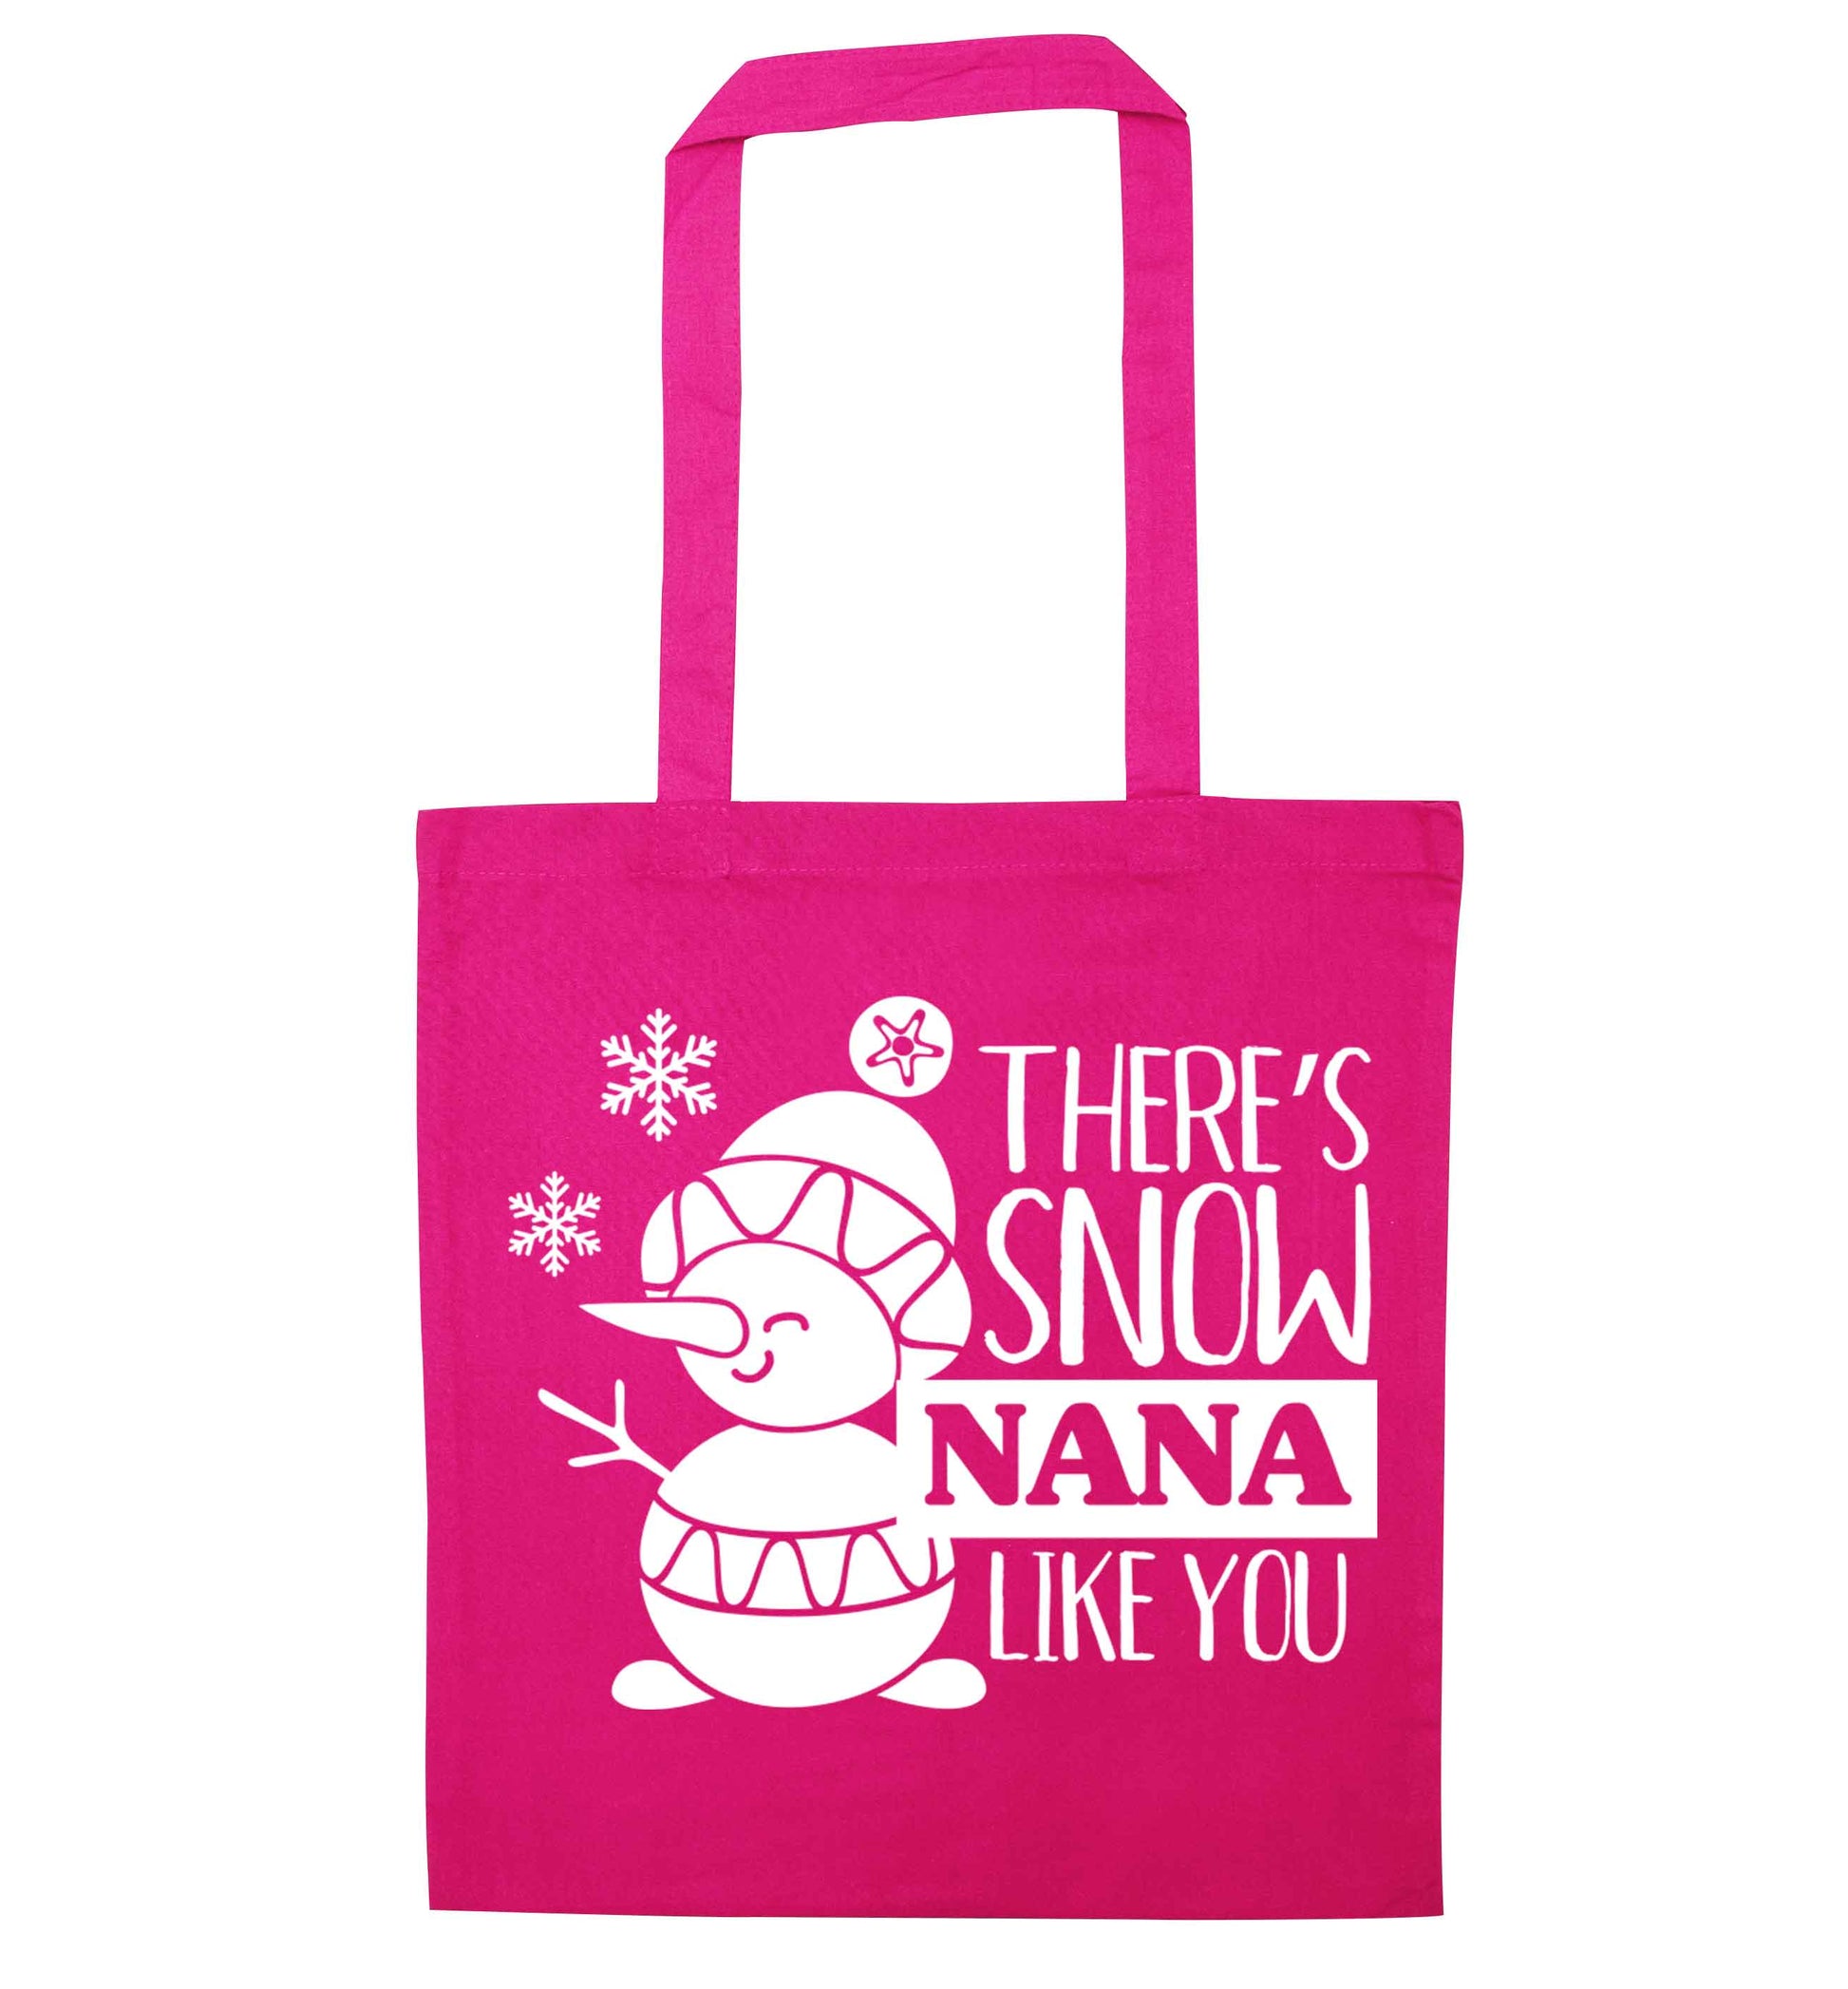 There's snow nana like you pink tote bag